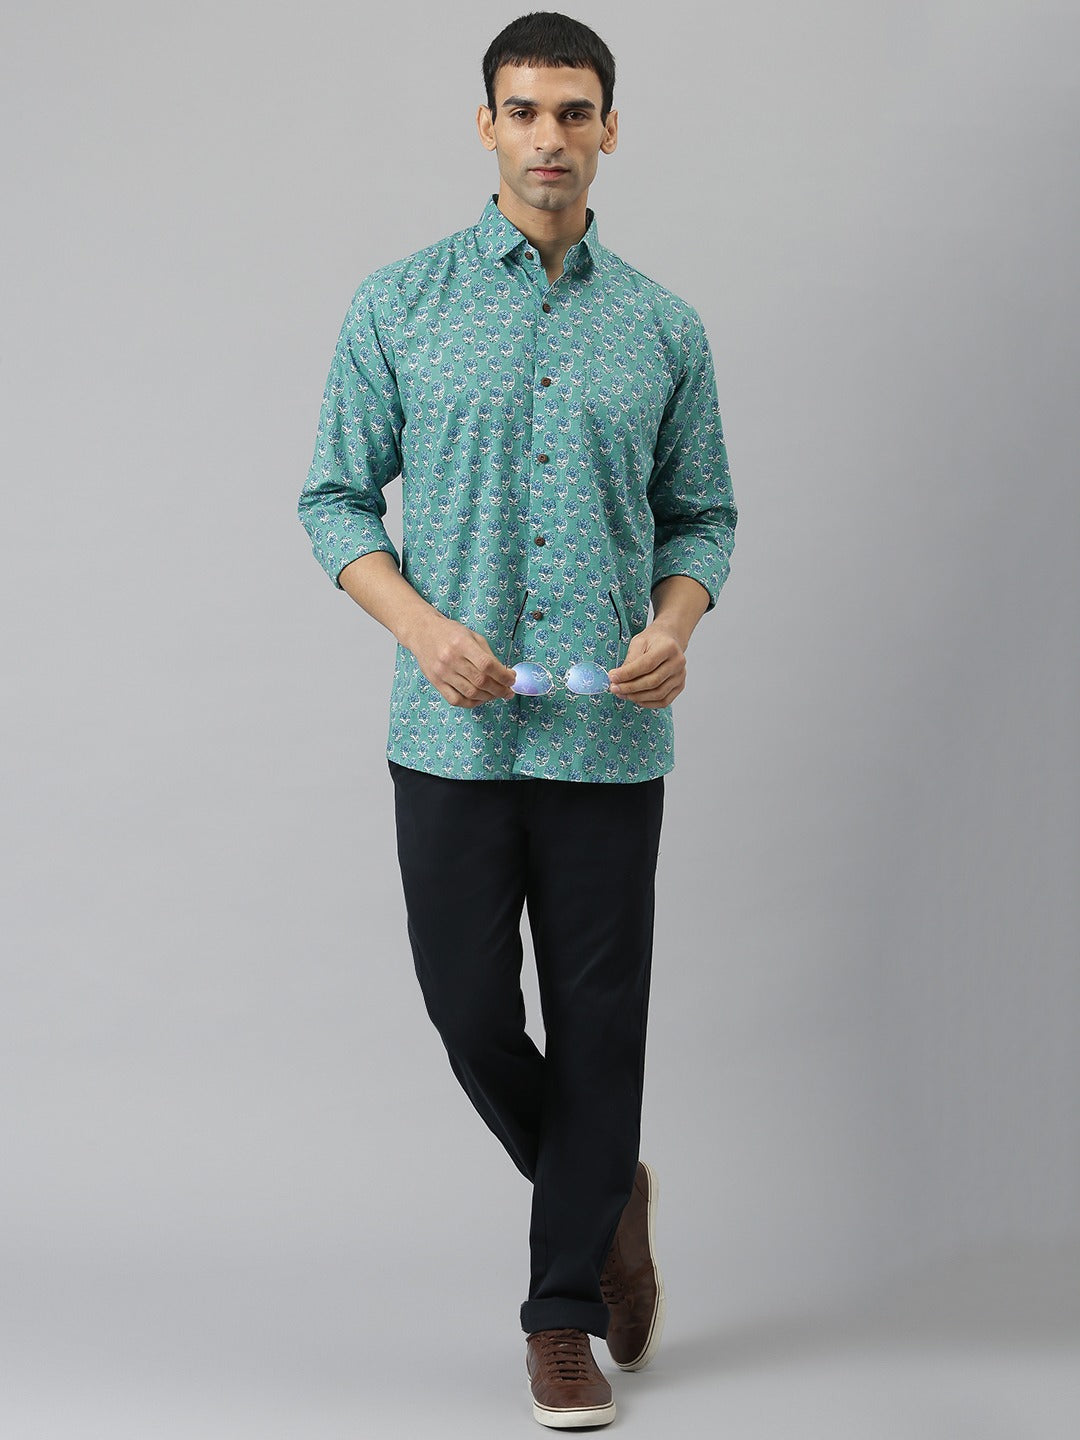 Millennial Men Turquoise Blue Comfort Printed Casual Shirt